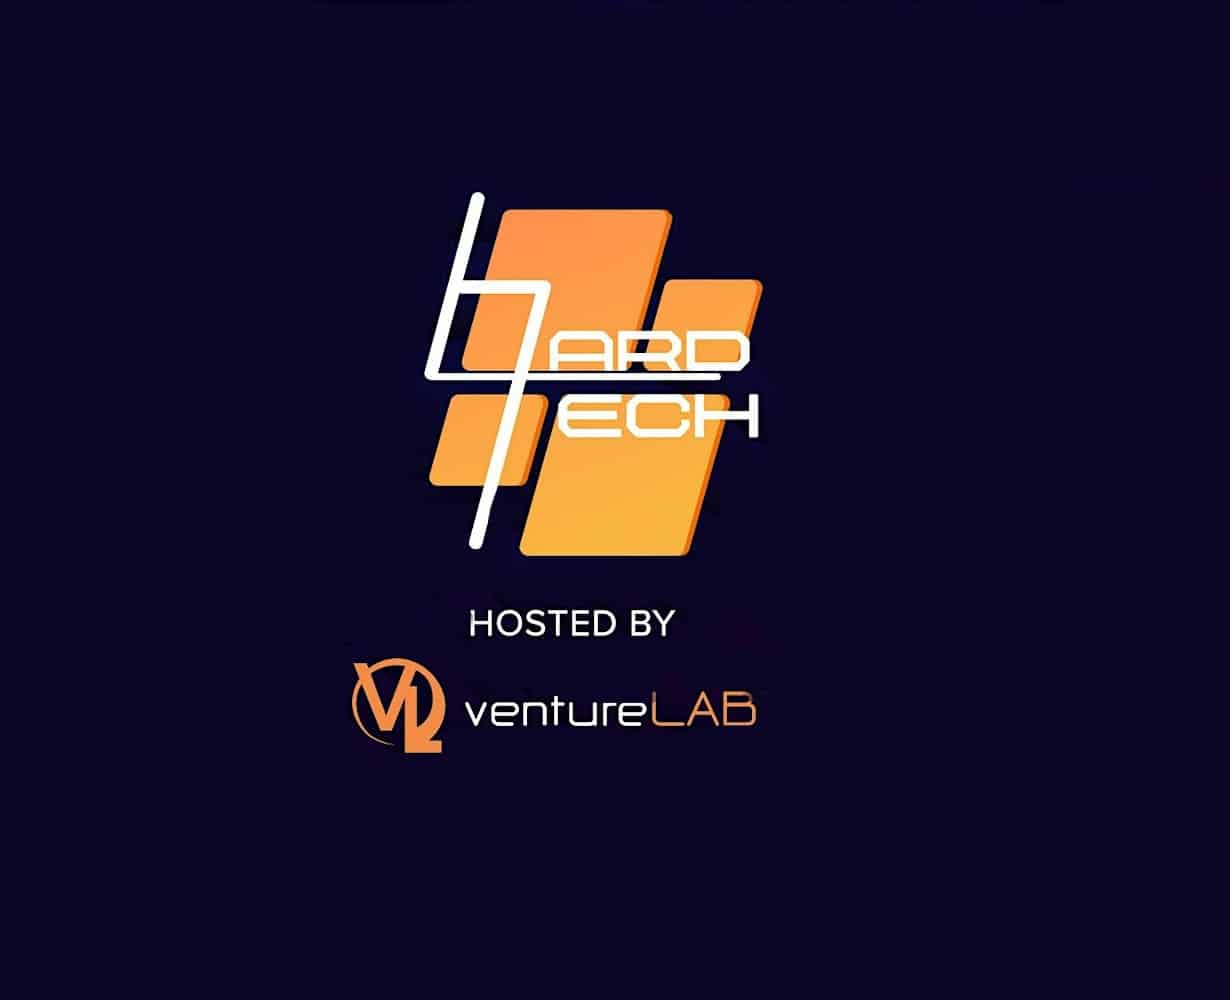 a banner featuring Hardtech venturelab logo